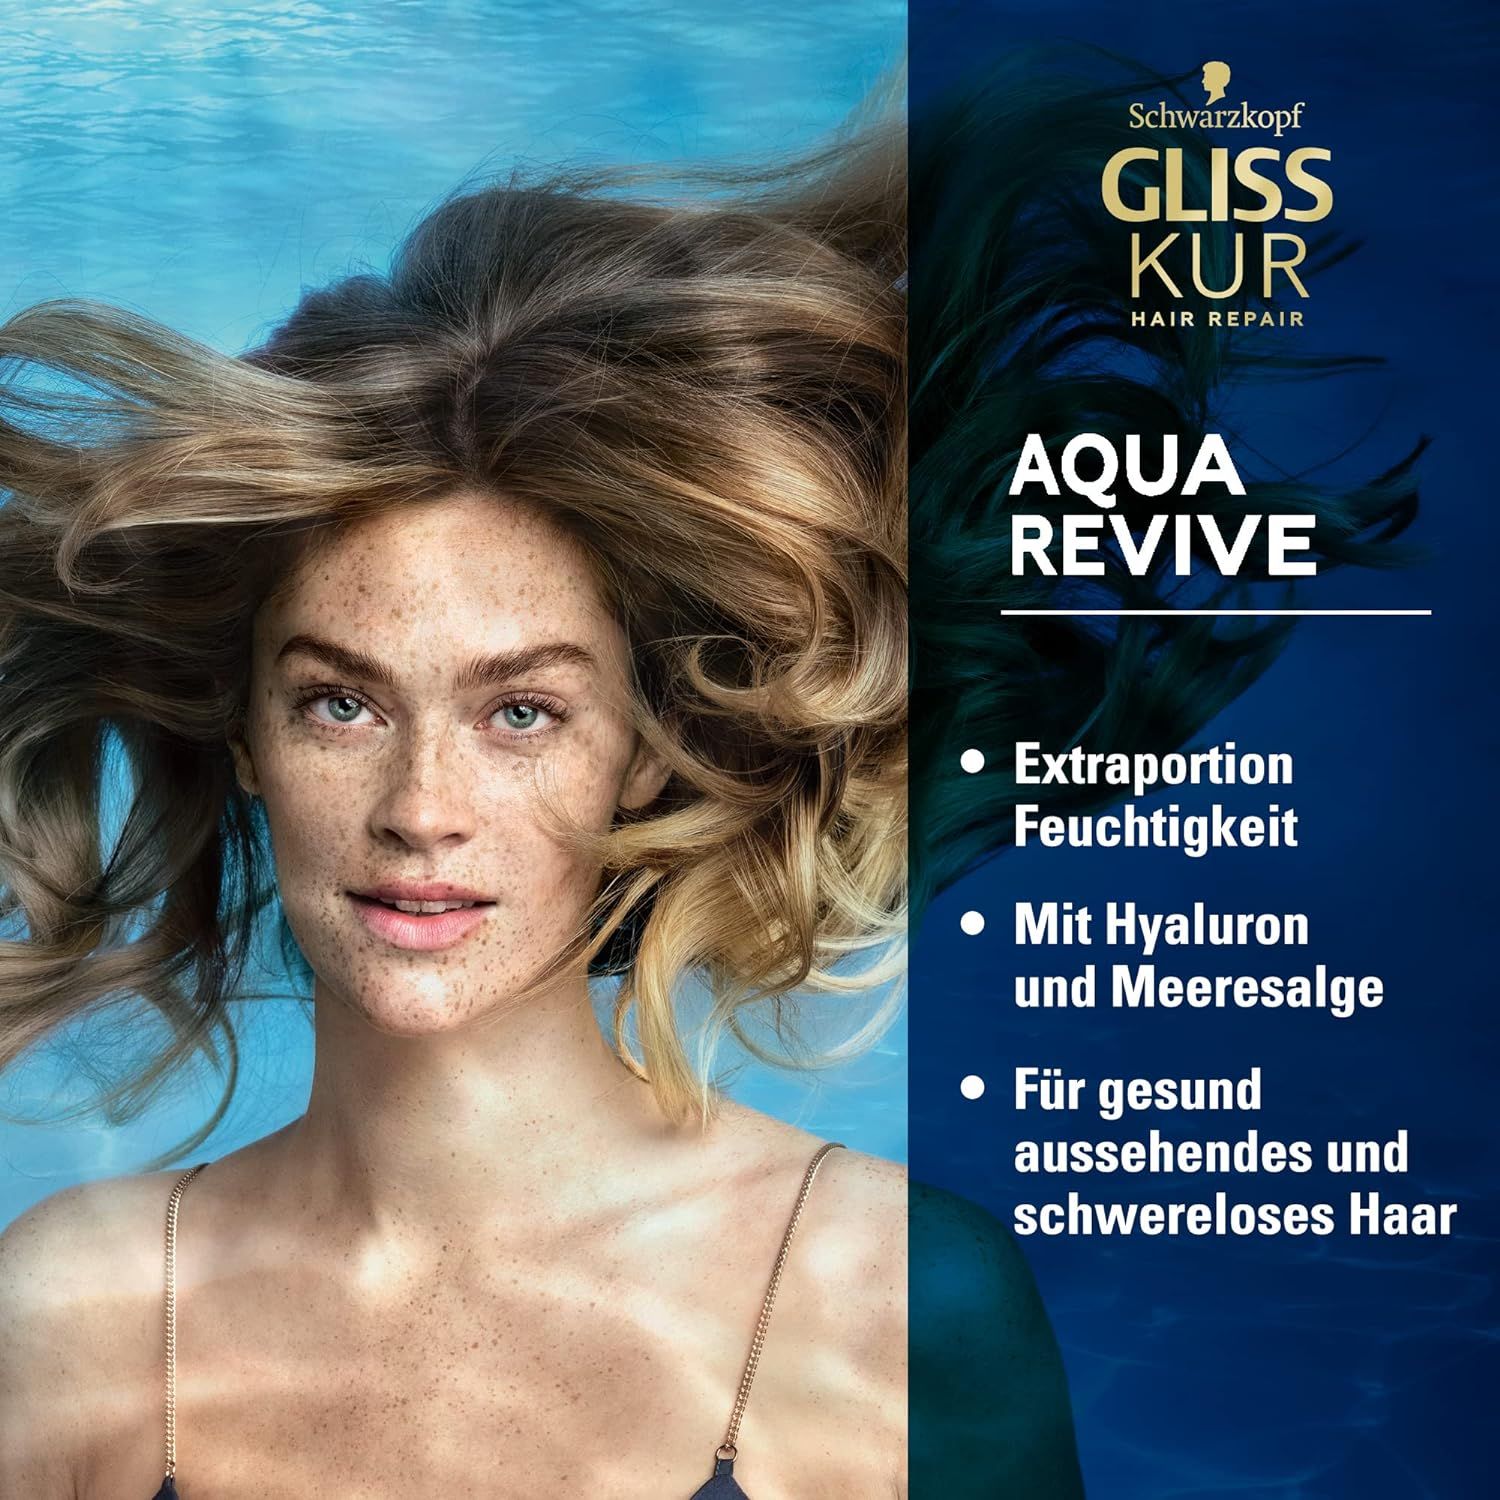 Schwarzkopf Gliss Kur 7 Sec Express-Repair-Kur Aqua Revive